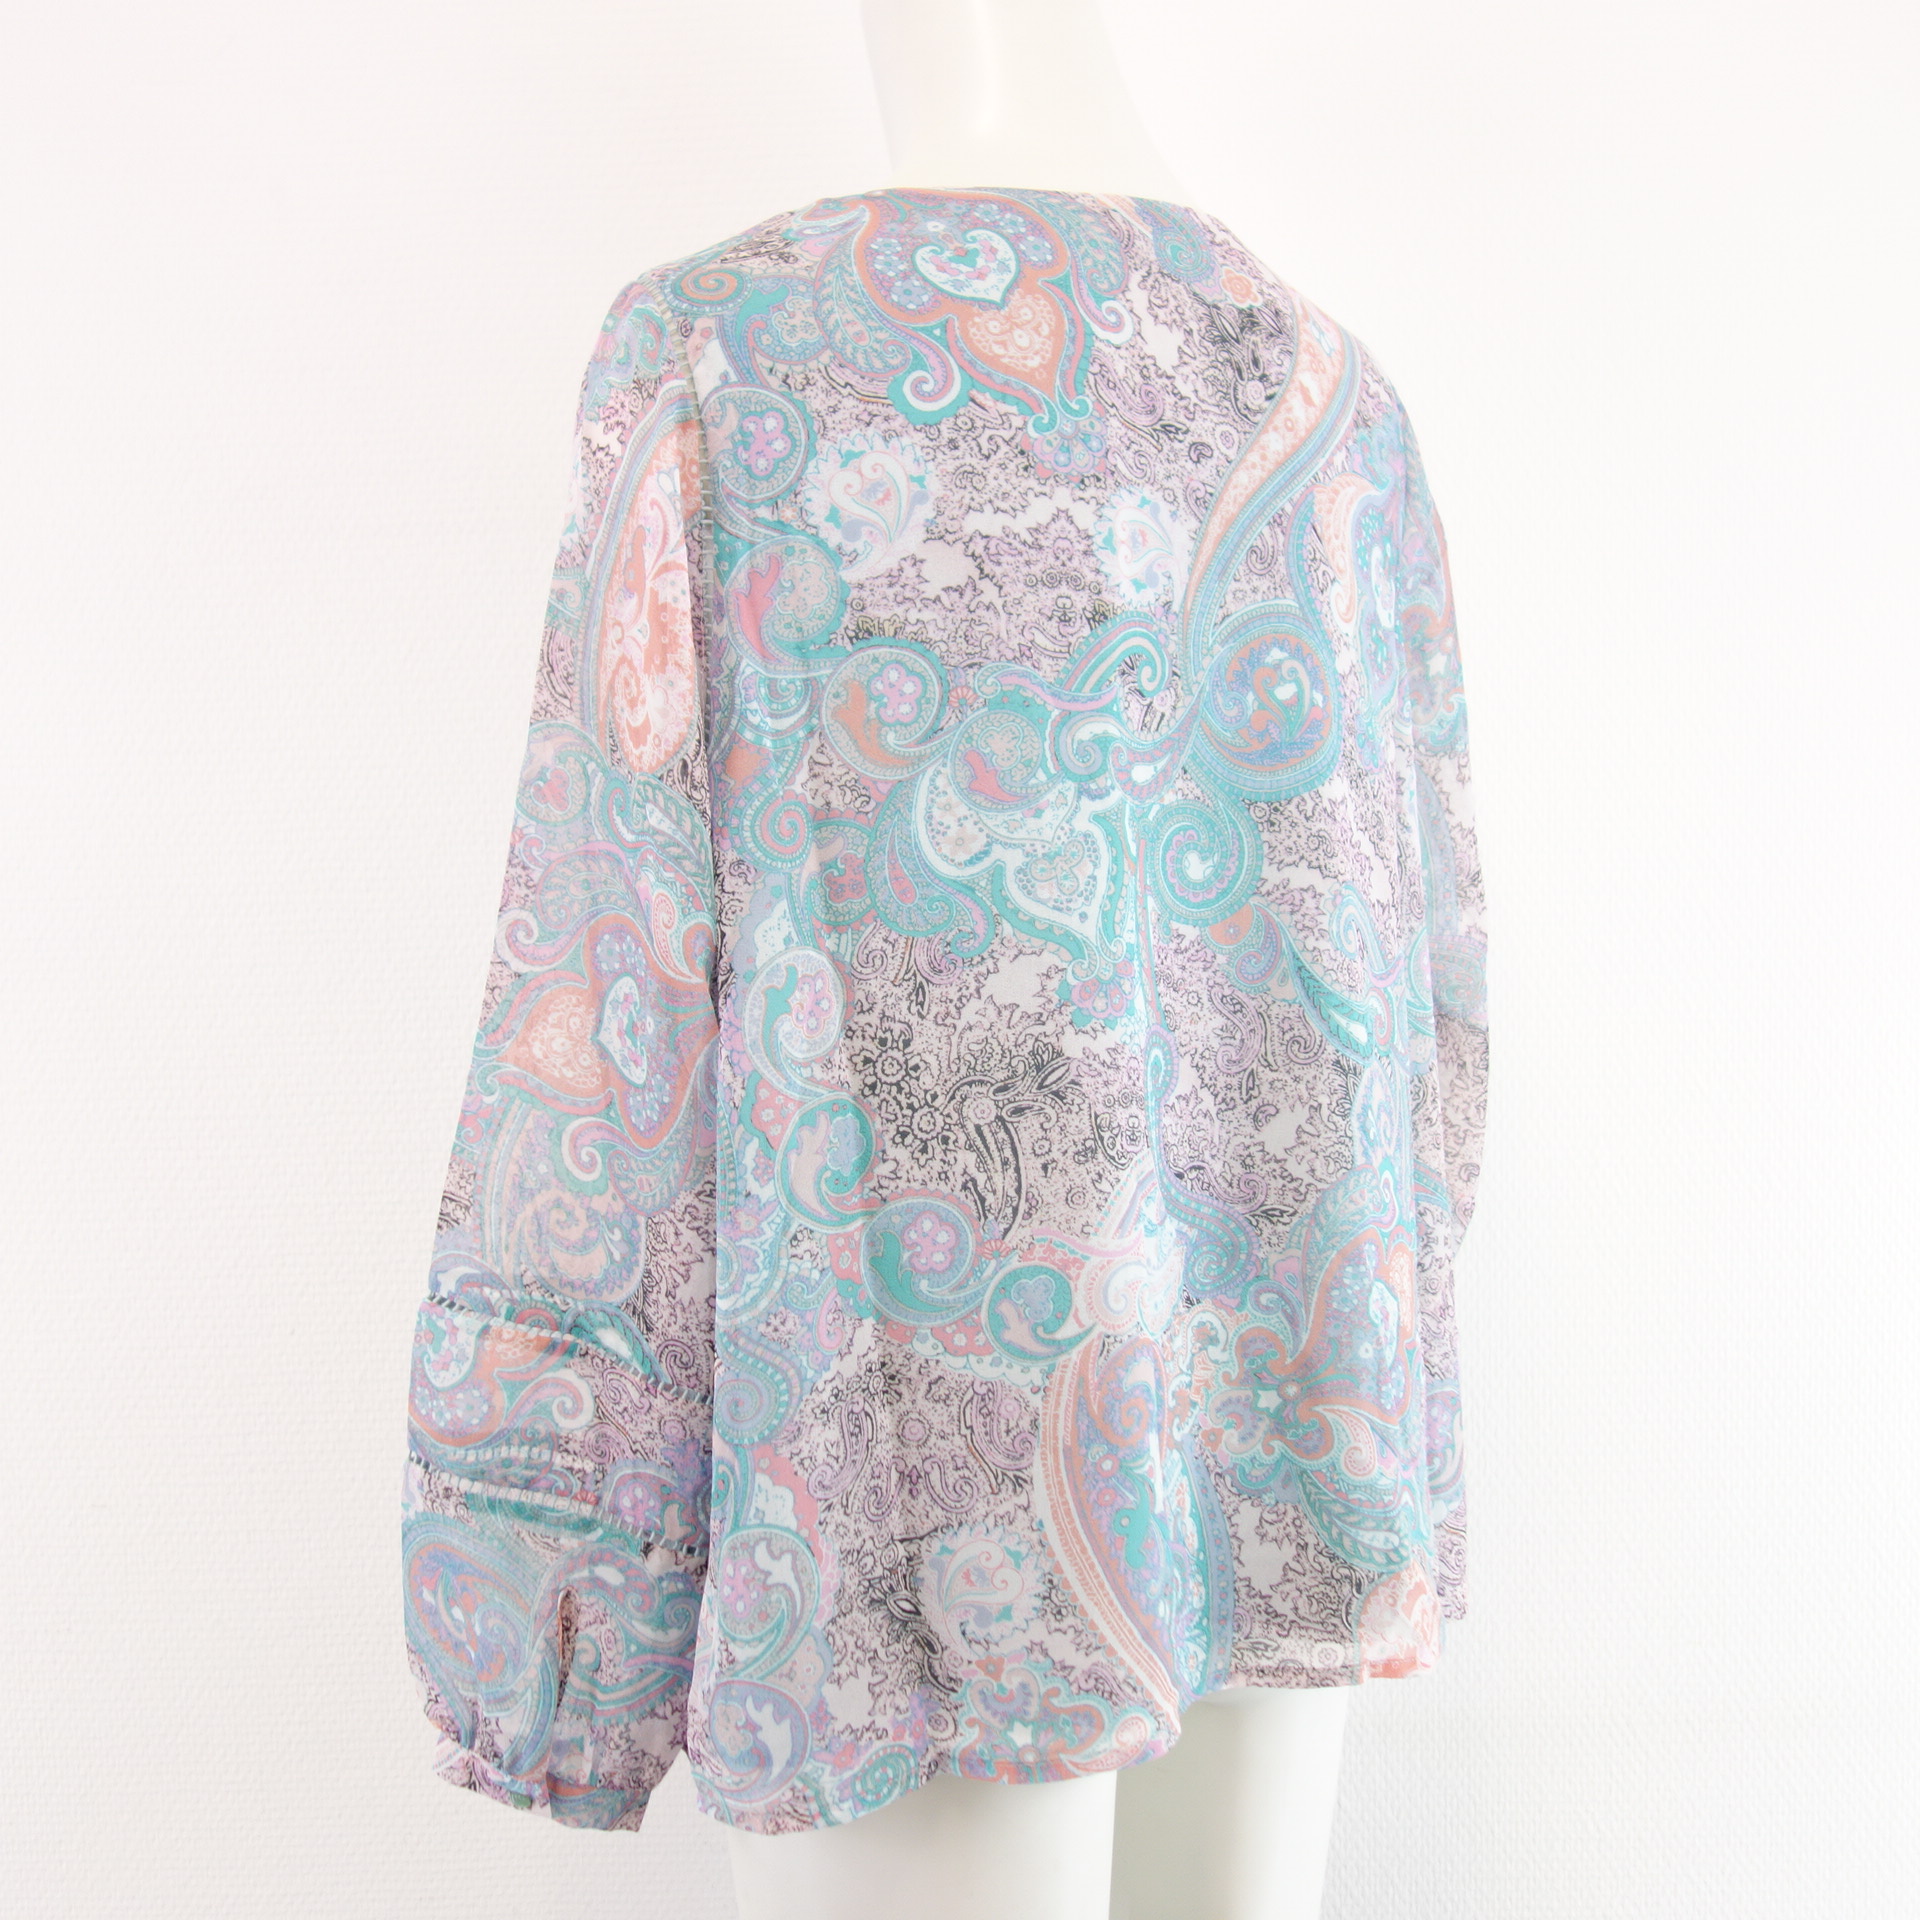 MORE & MORE Bluse Damen Bunt Blumen Muster Paisley Pastellfarben